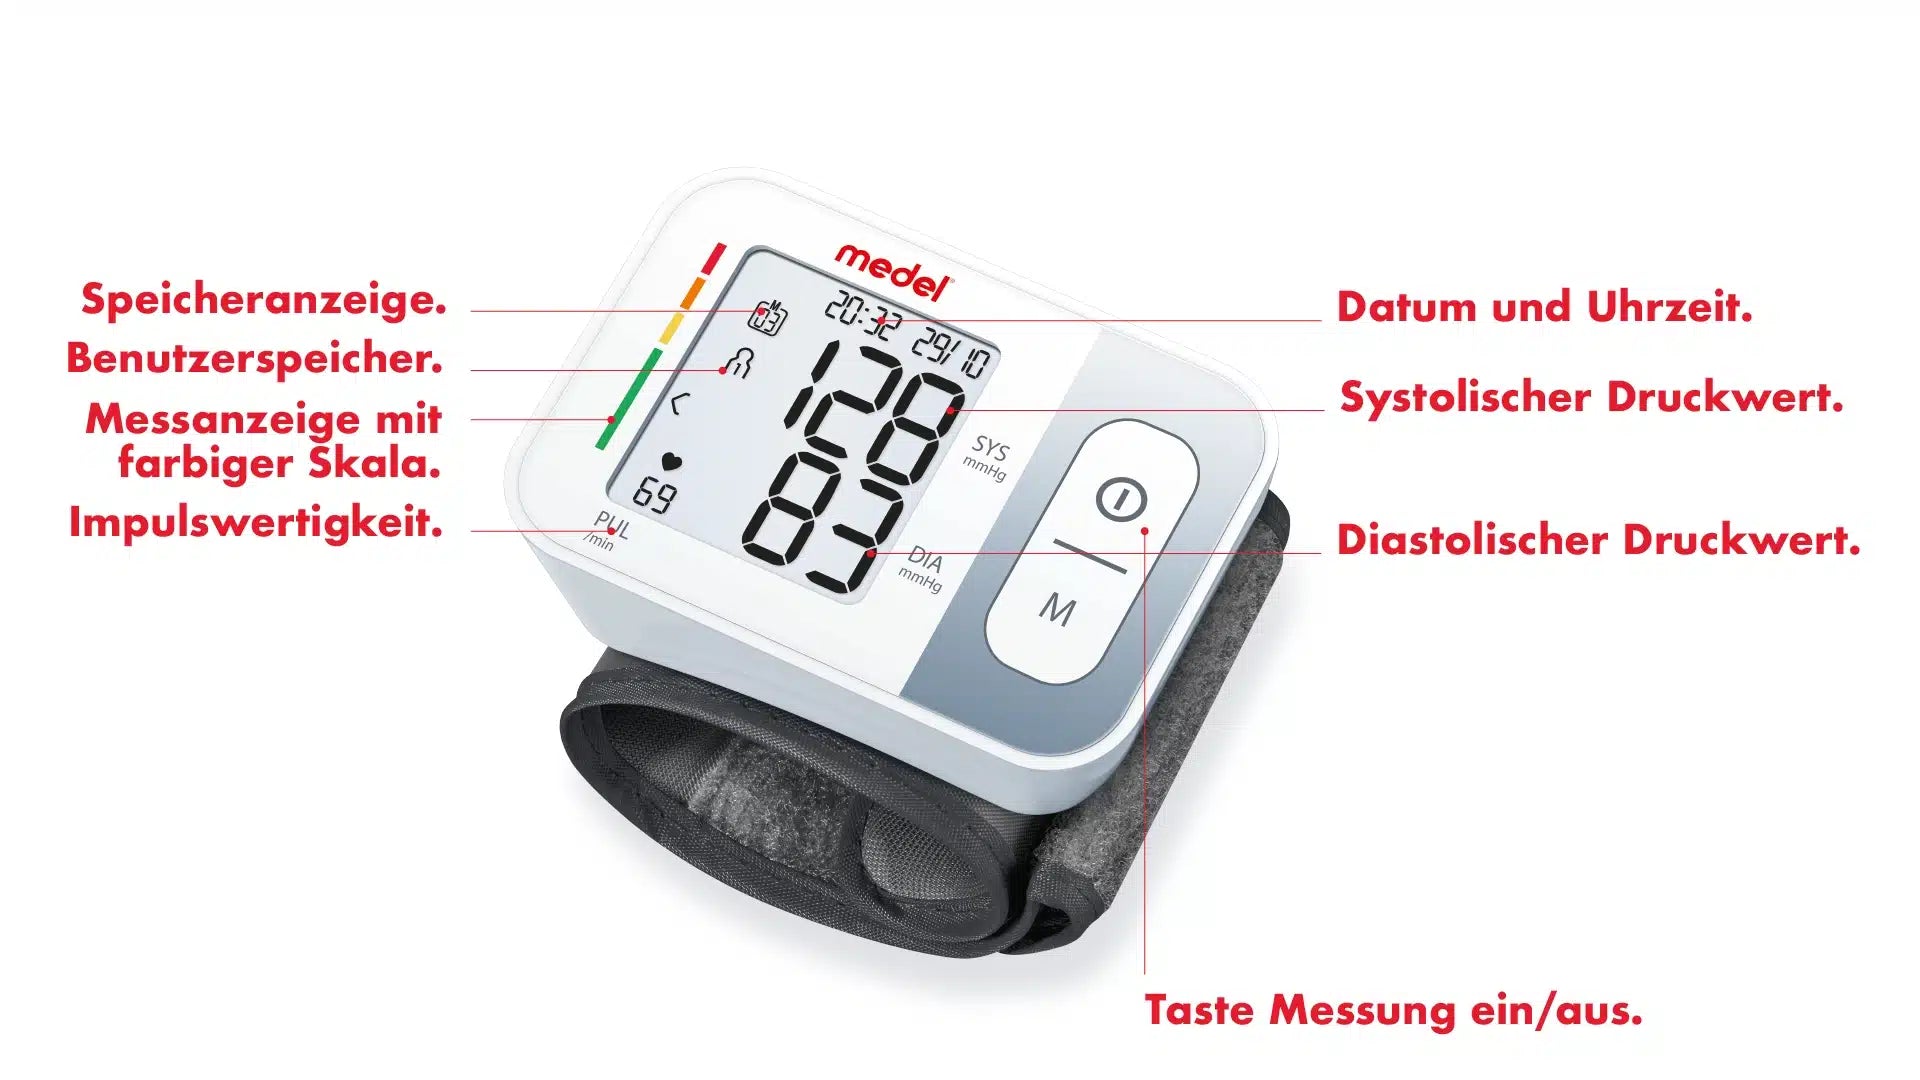 Medel Quick wrist blood pressure monitor